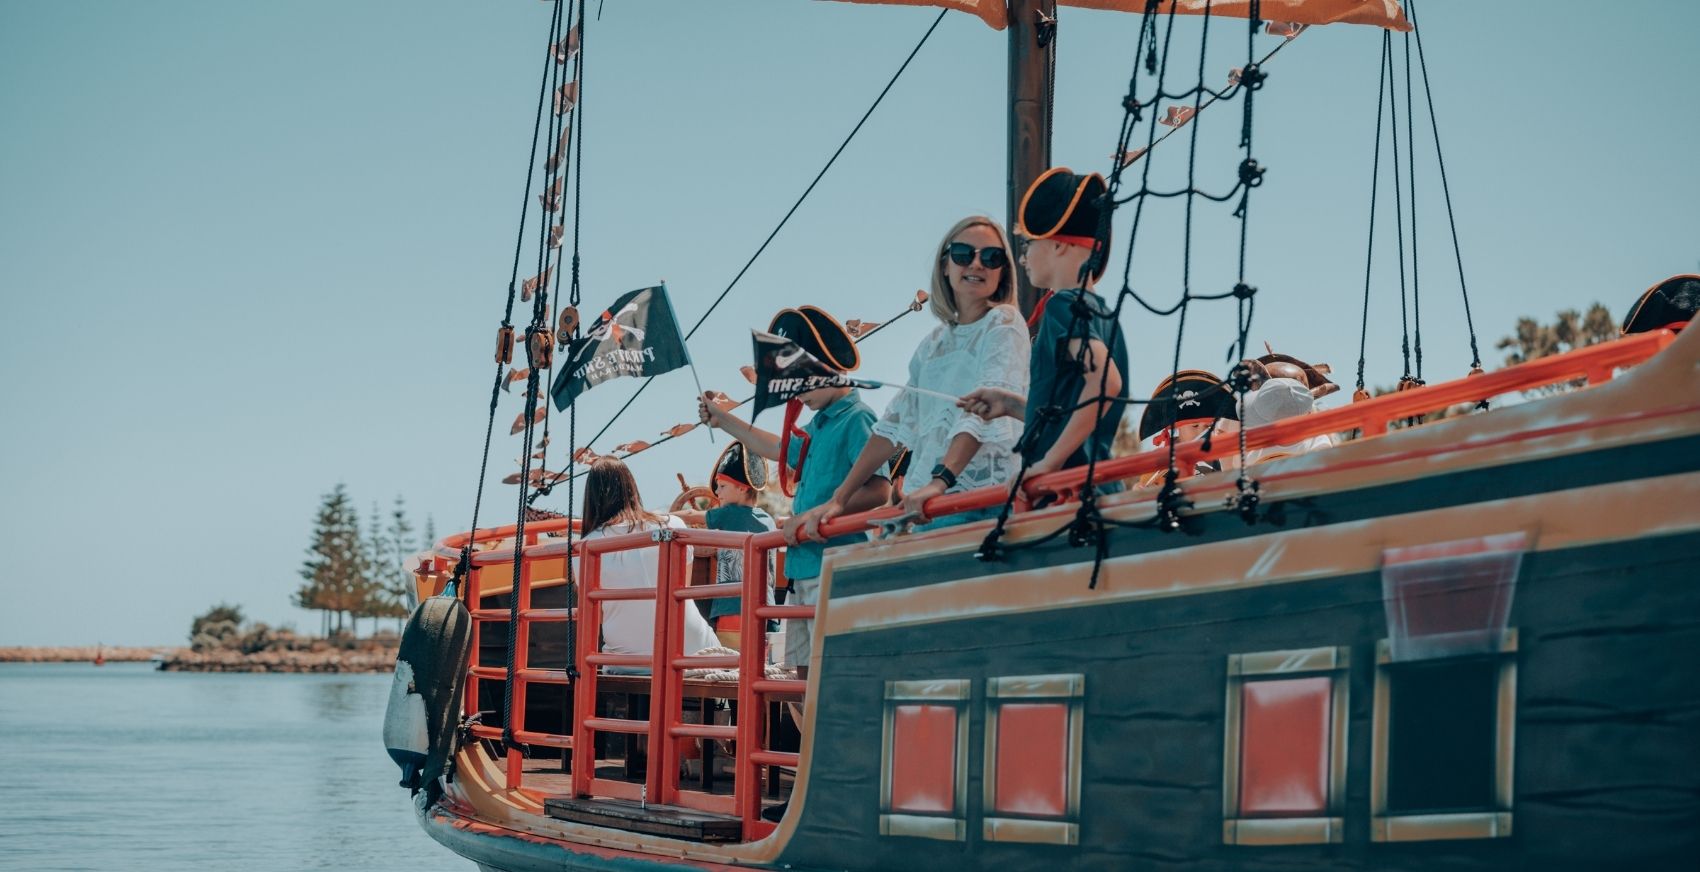 The Pirate Ship Mandurah